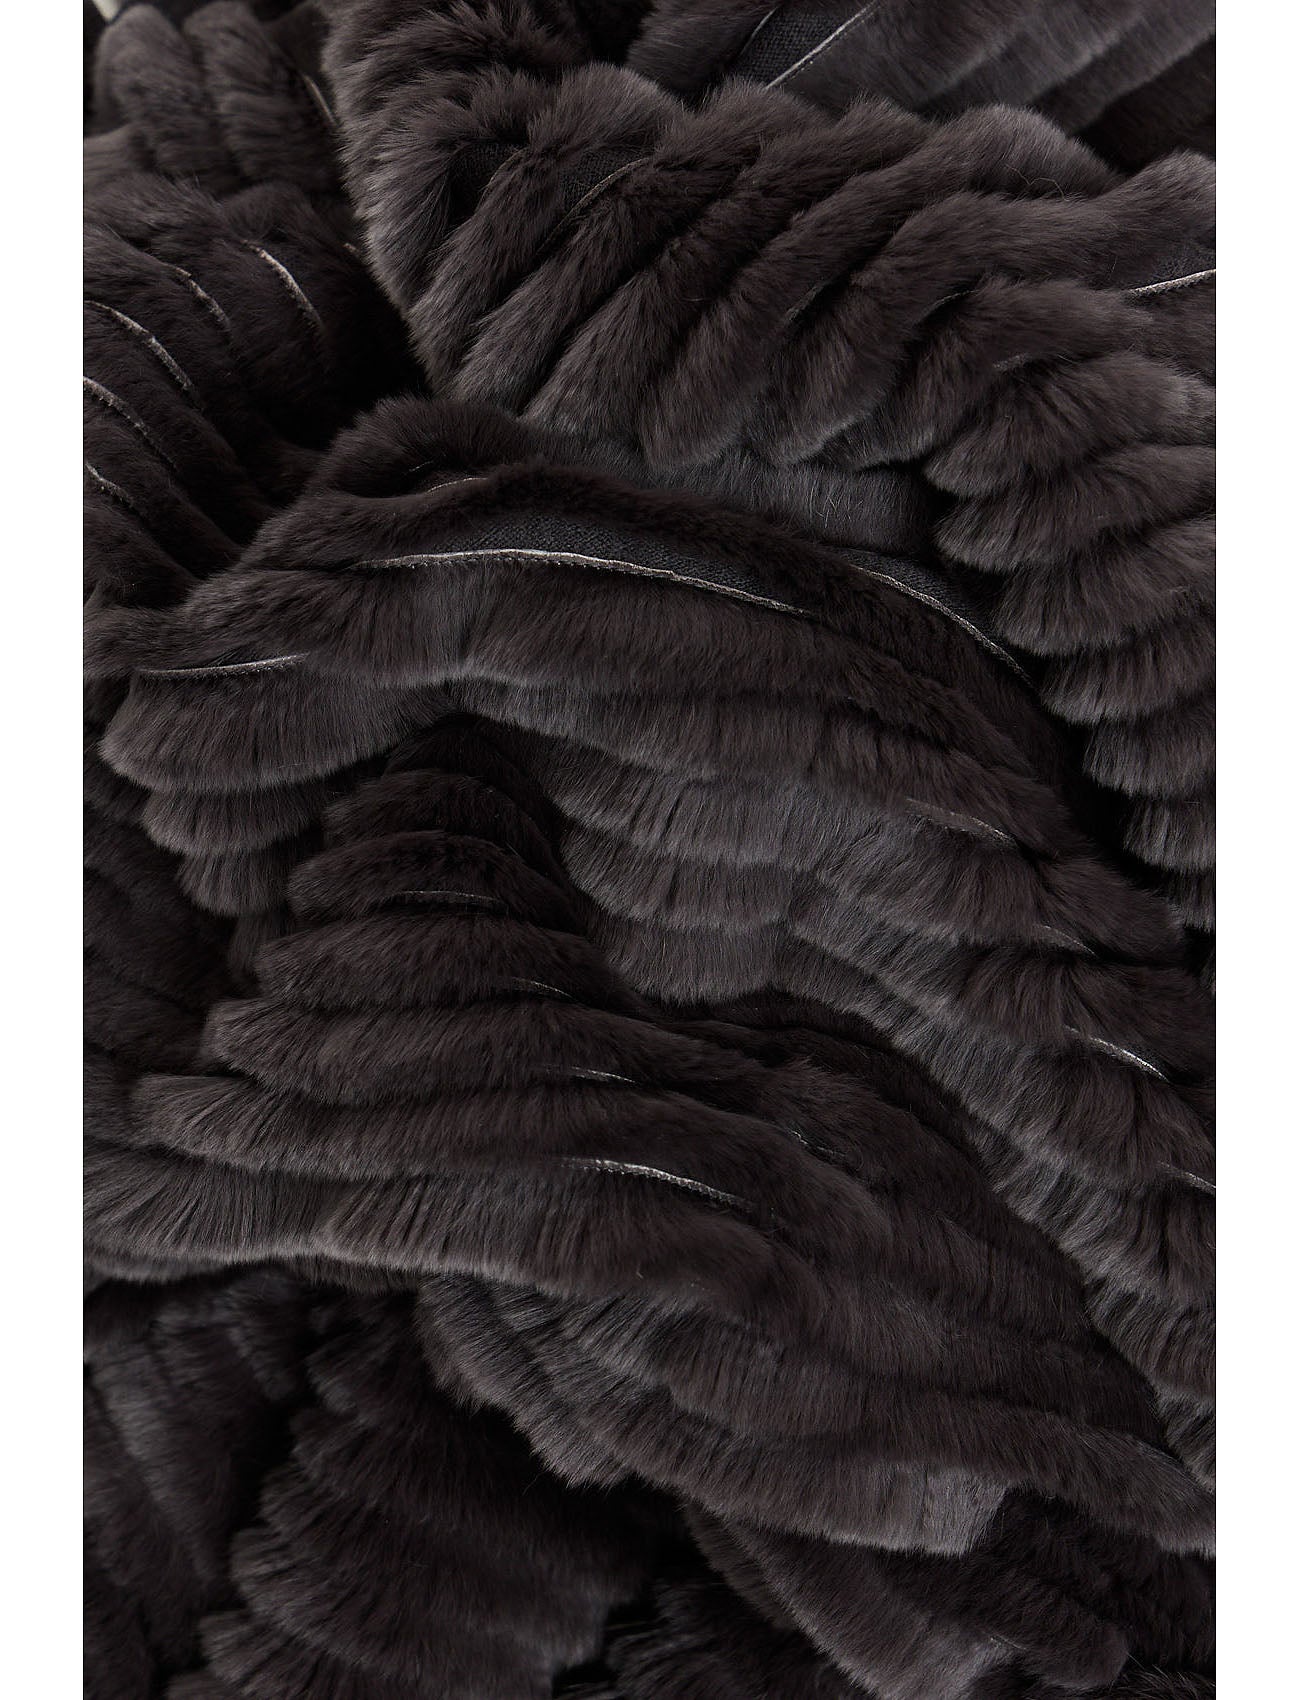 Felldecke auf Wolle - basalt grau - 150x200cm